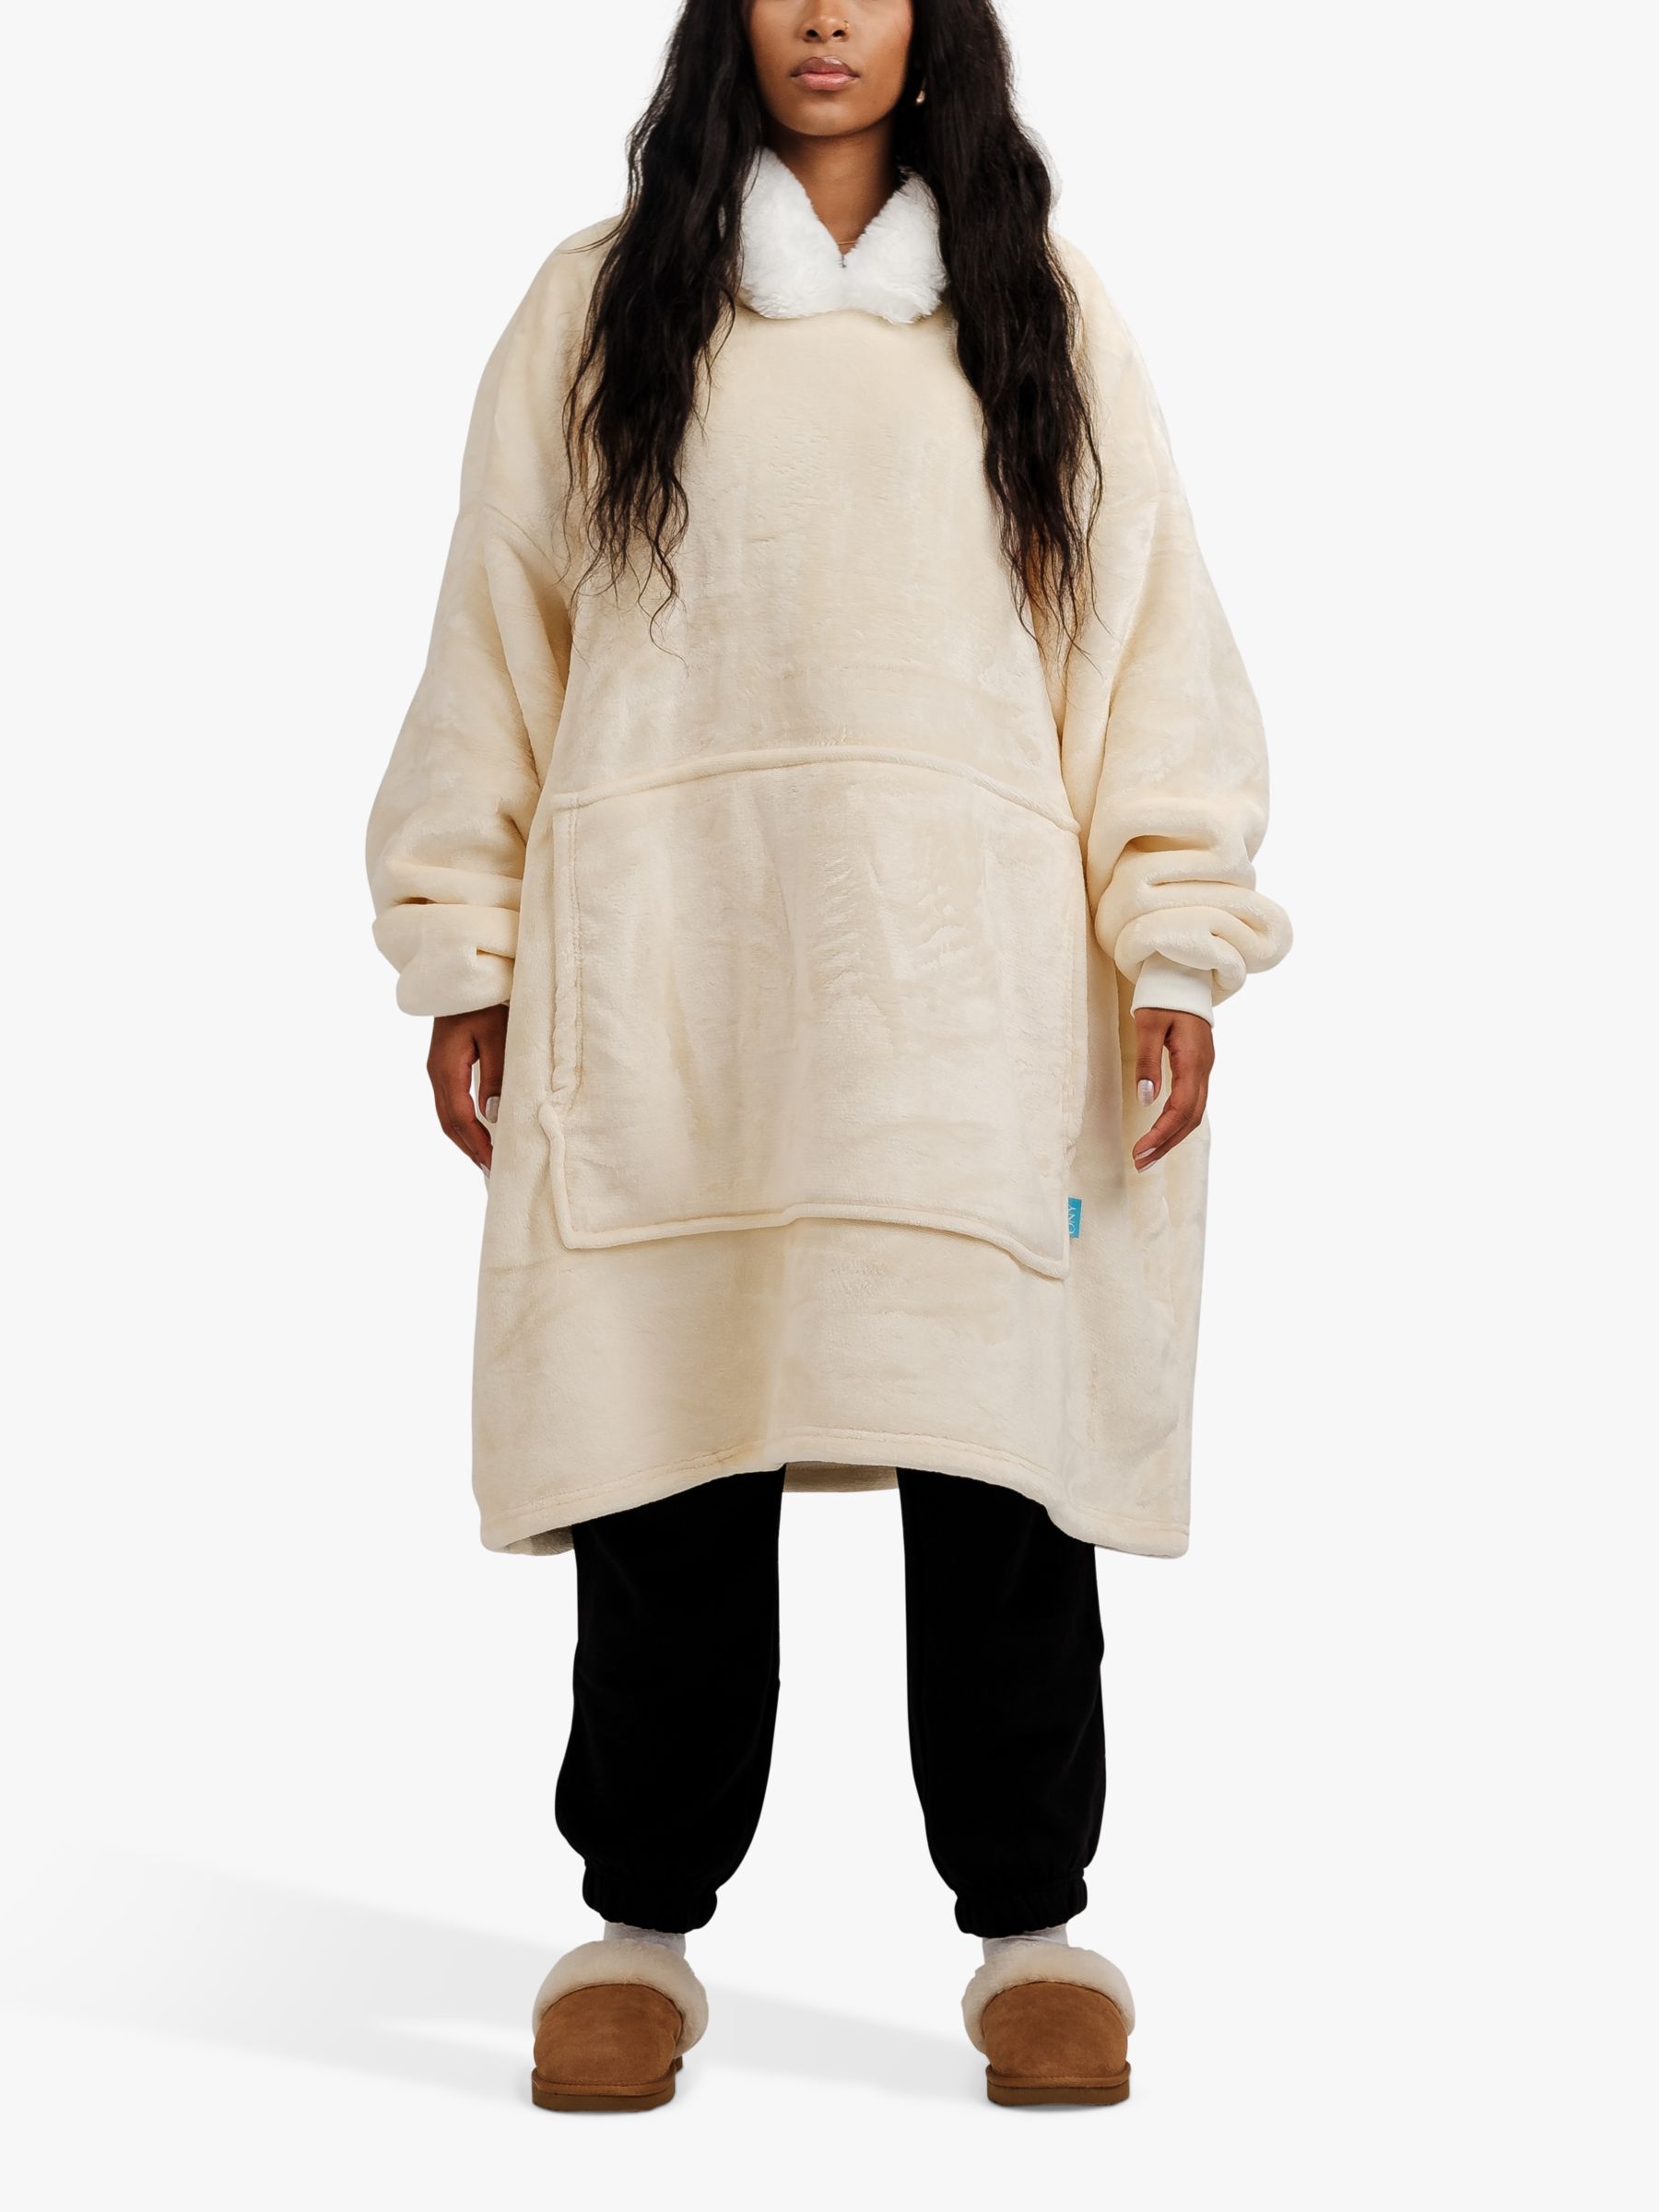 Ony Unisex Faux Fur Collar Sherpa Lined Fleece Hoodie Blanket, Cream/White, One Size